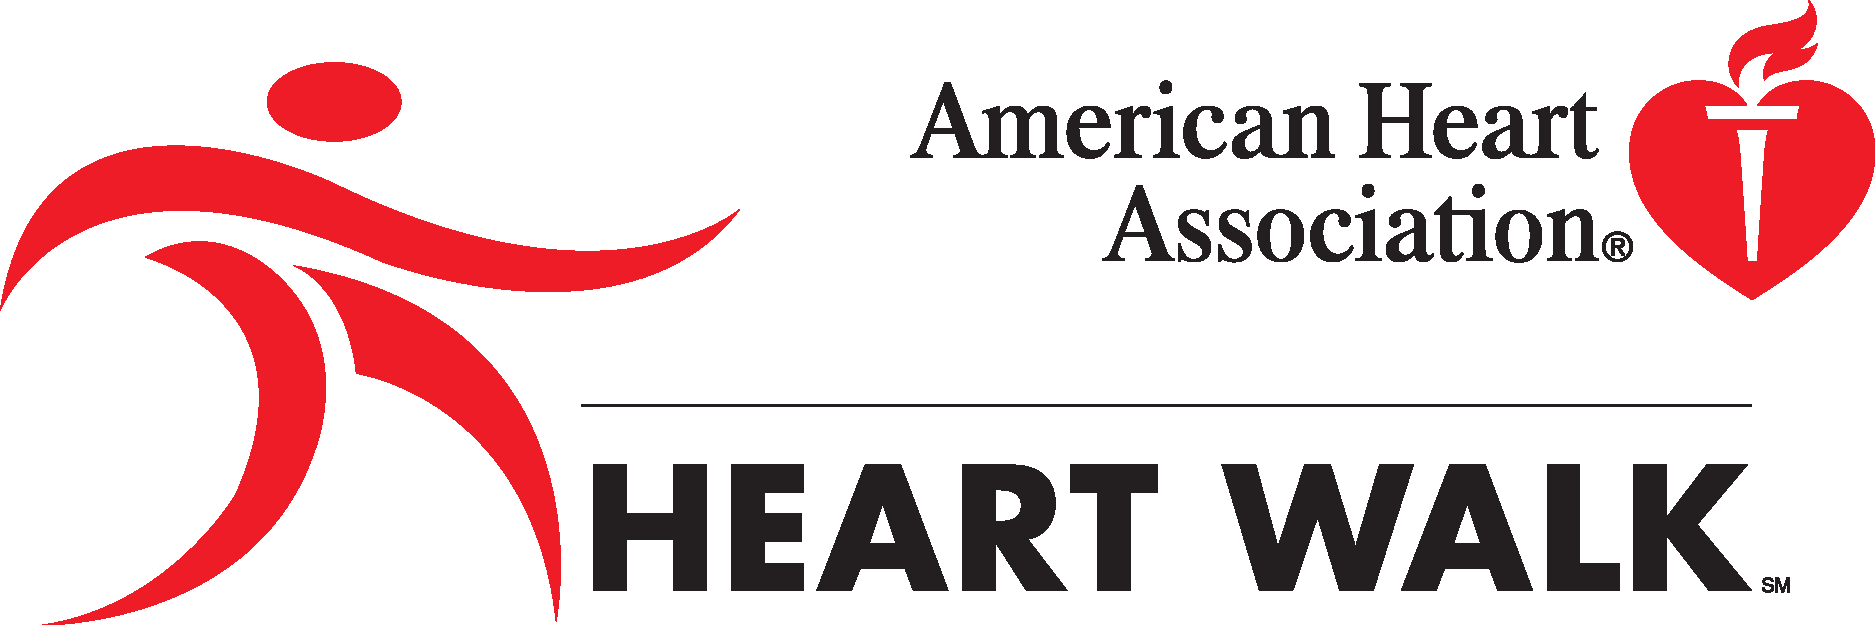 Heart Walk Logo Vector